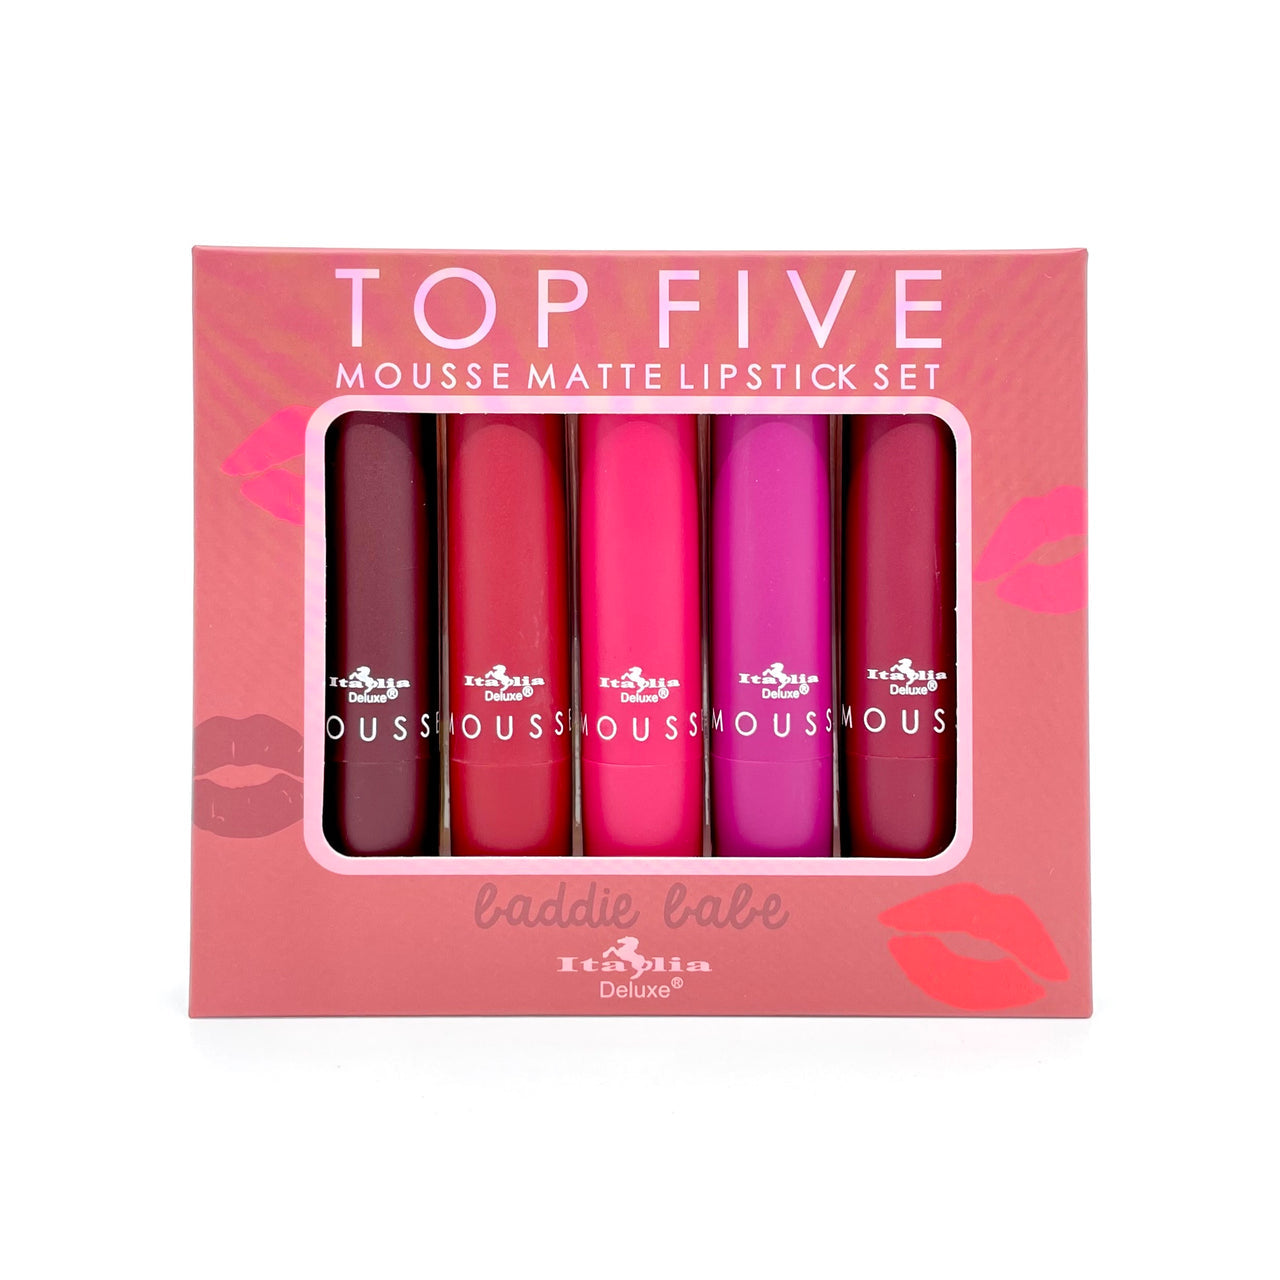 Top Five Mousse Matte Lipstick Topfive